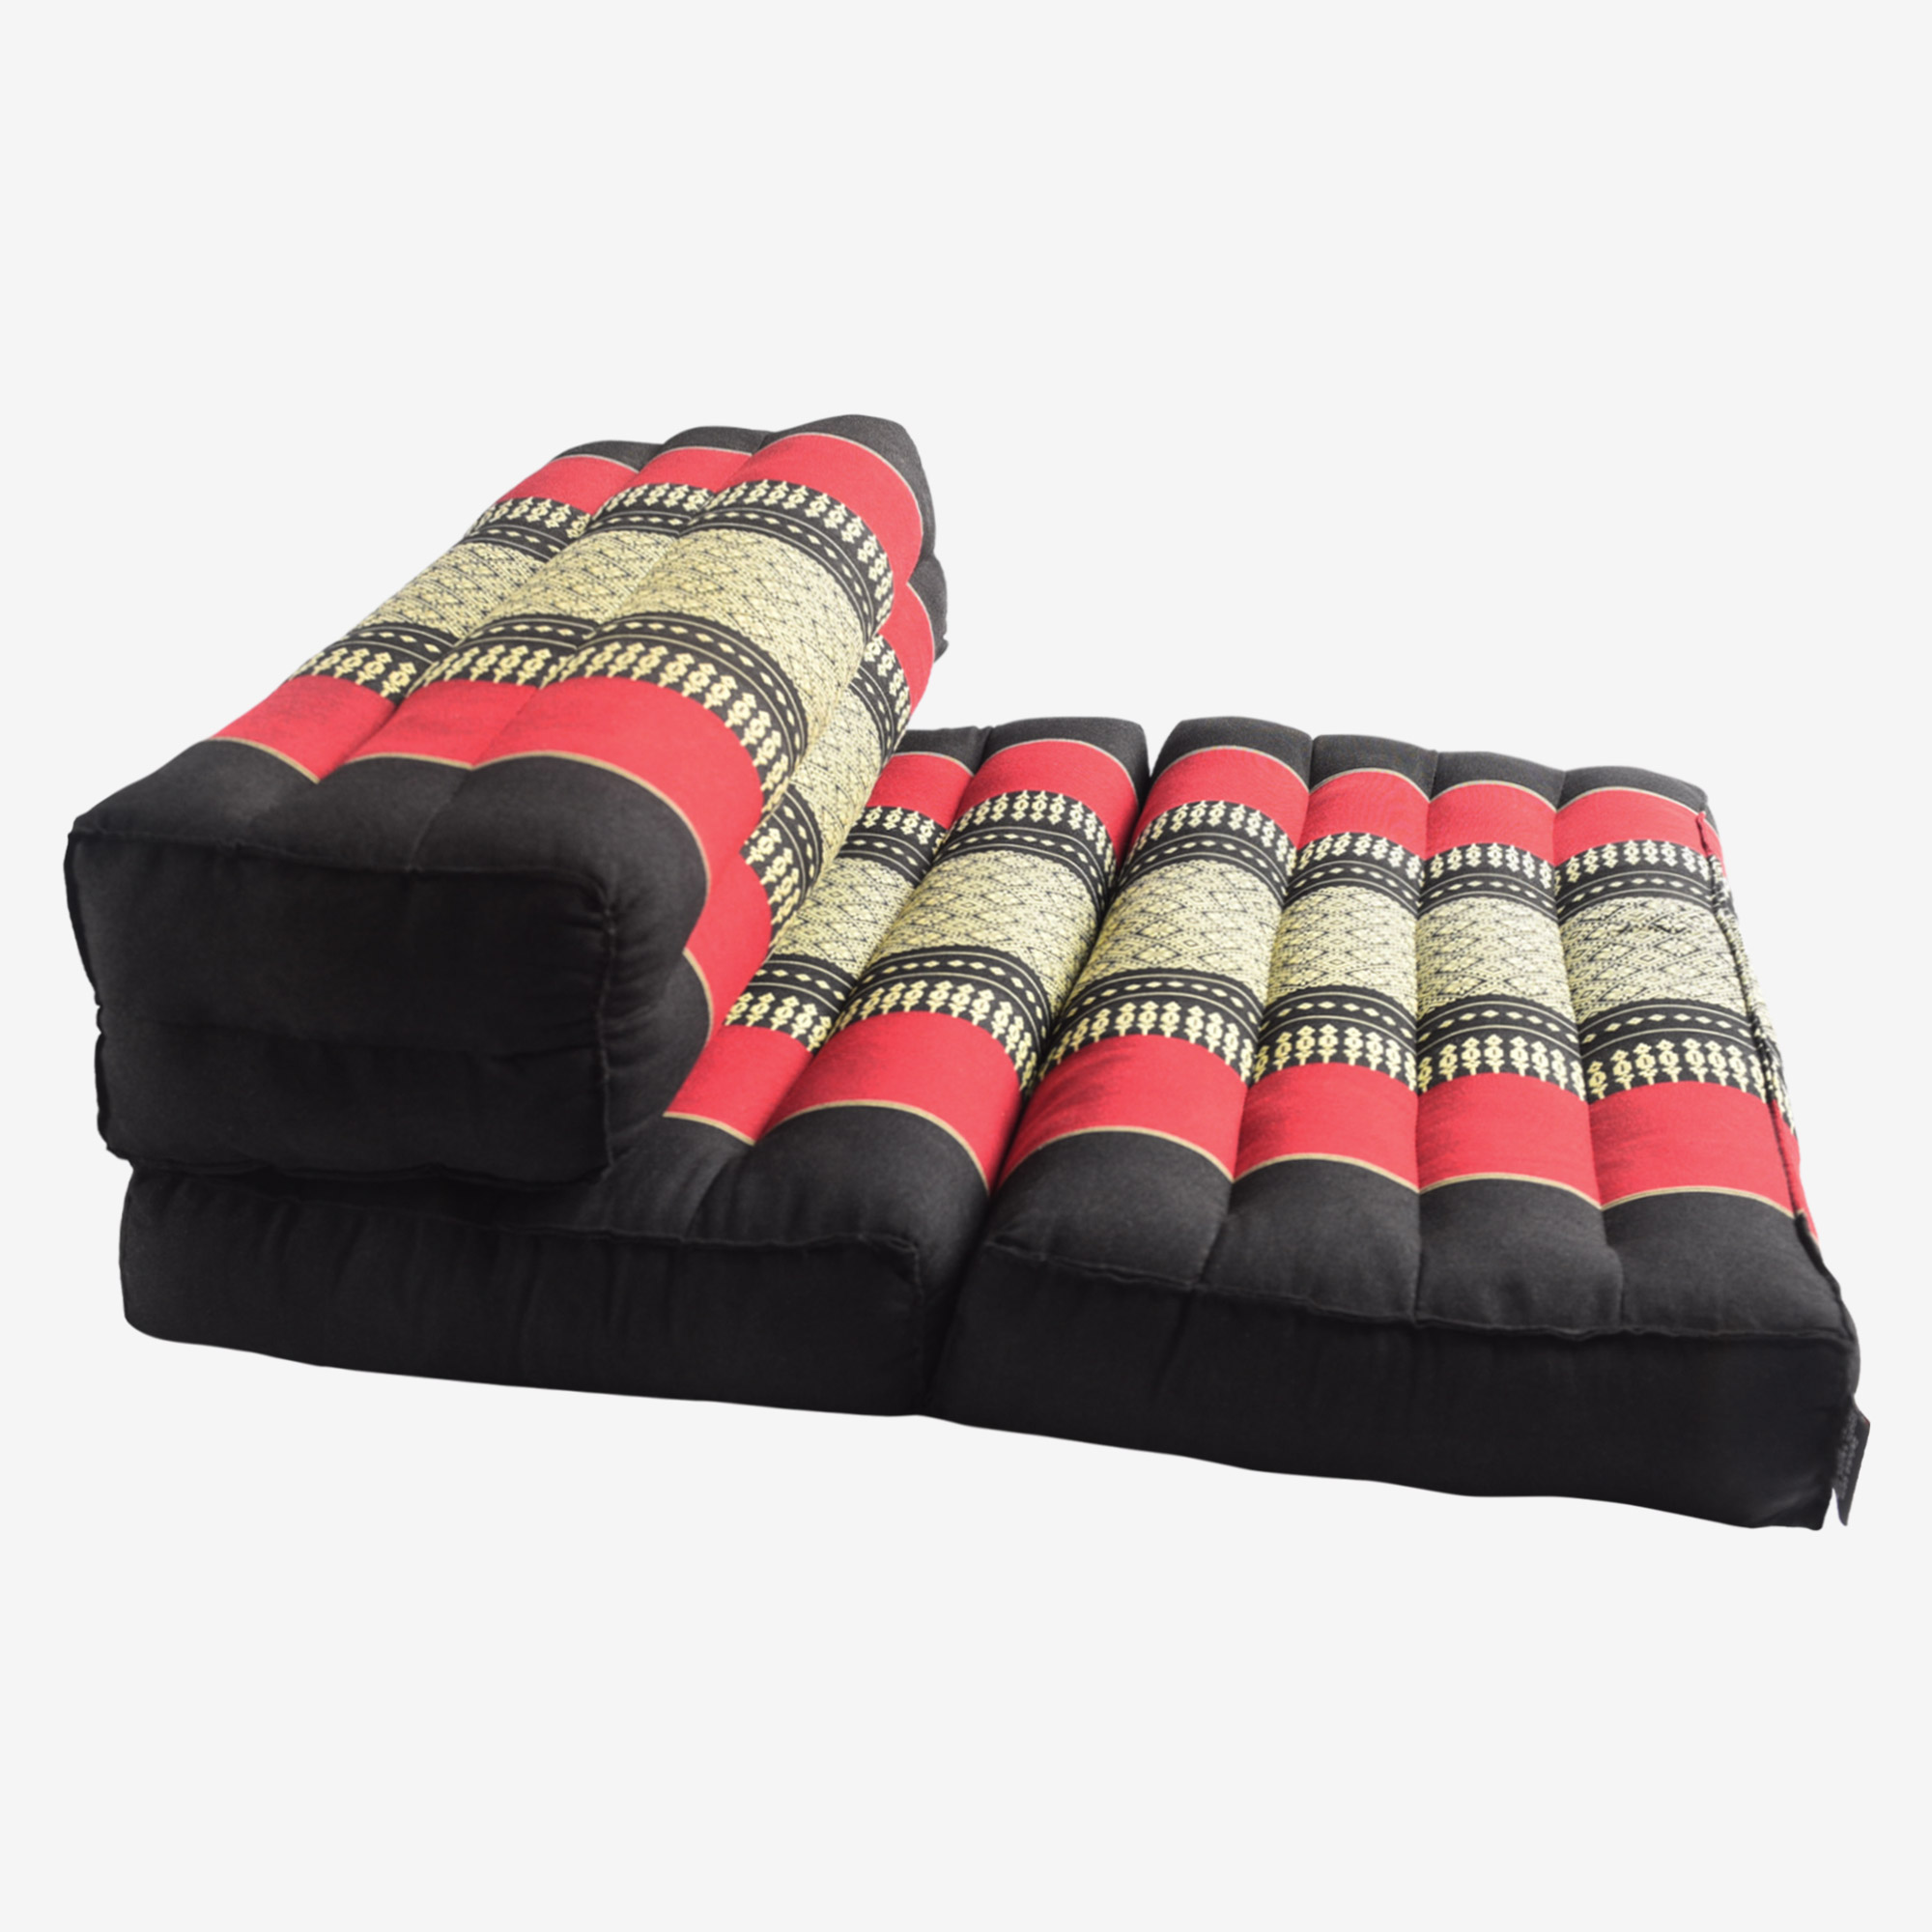 Zafuko Double Foldable Meditation Cushion - Black/Red